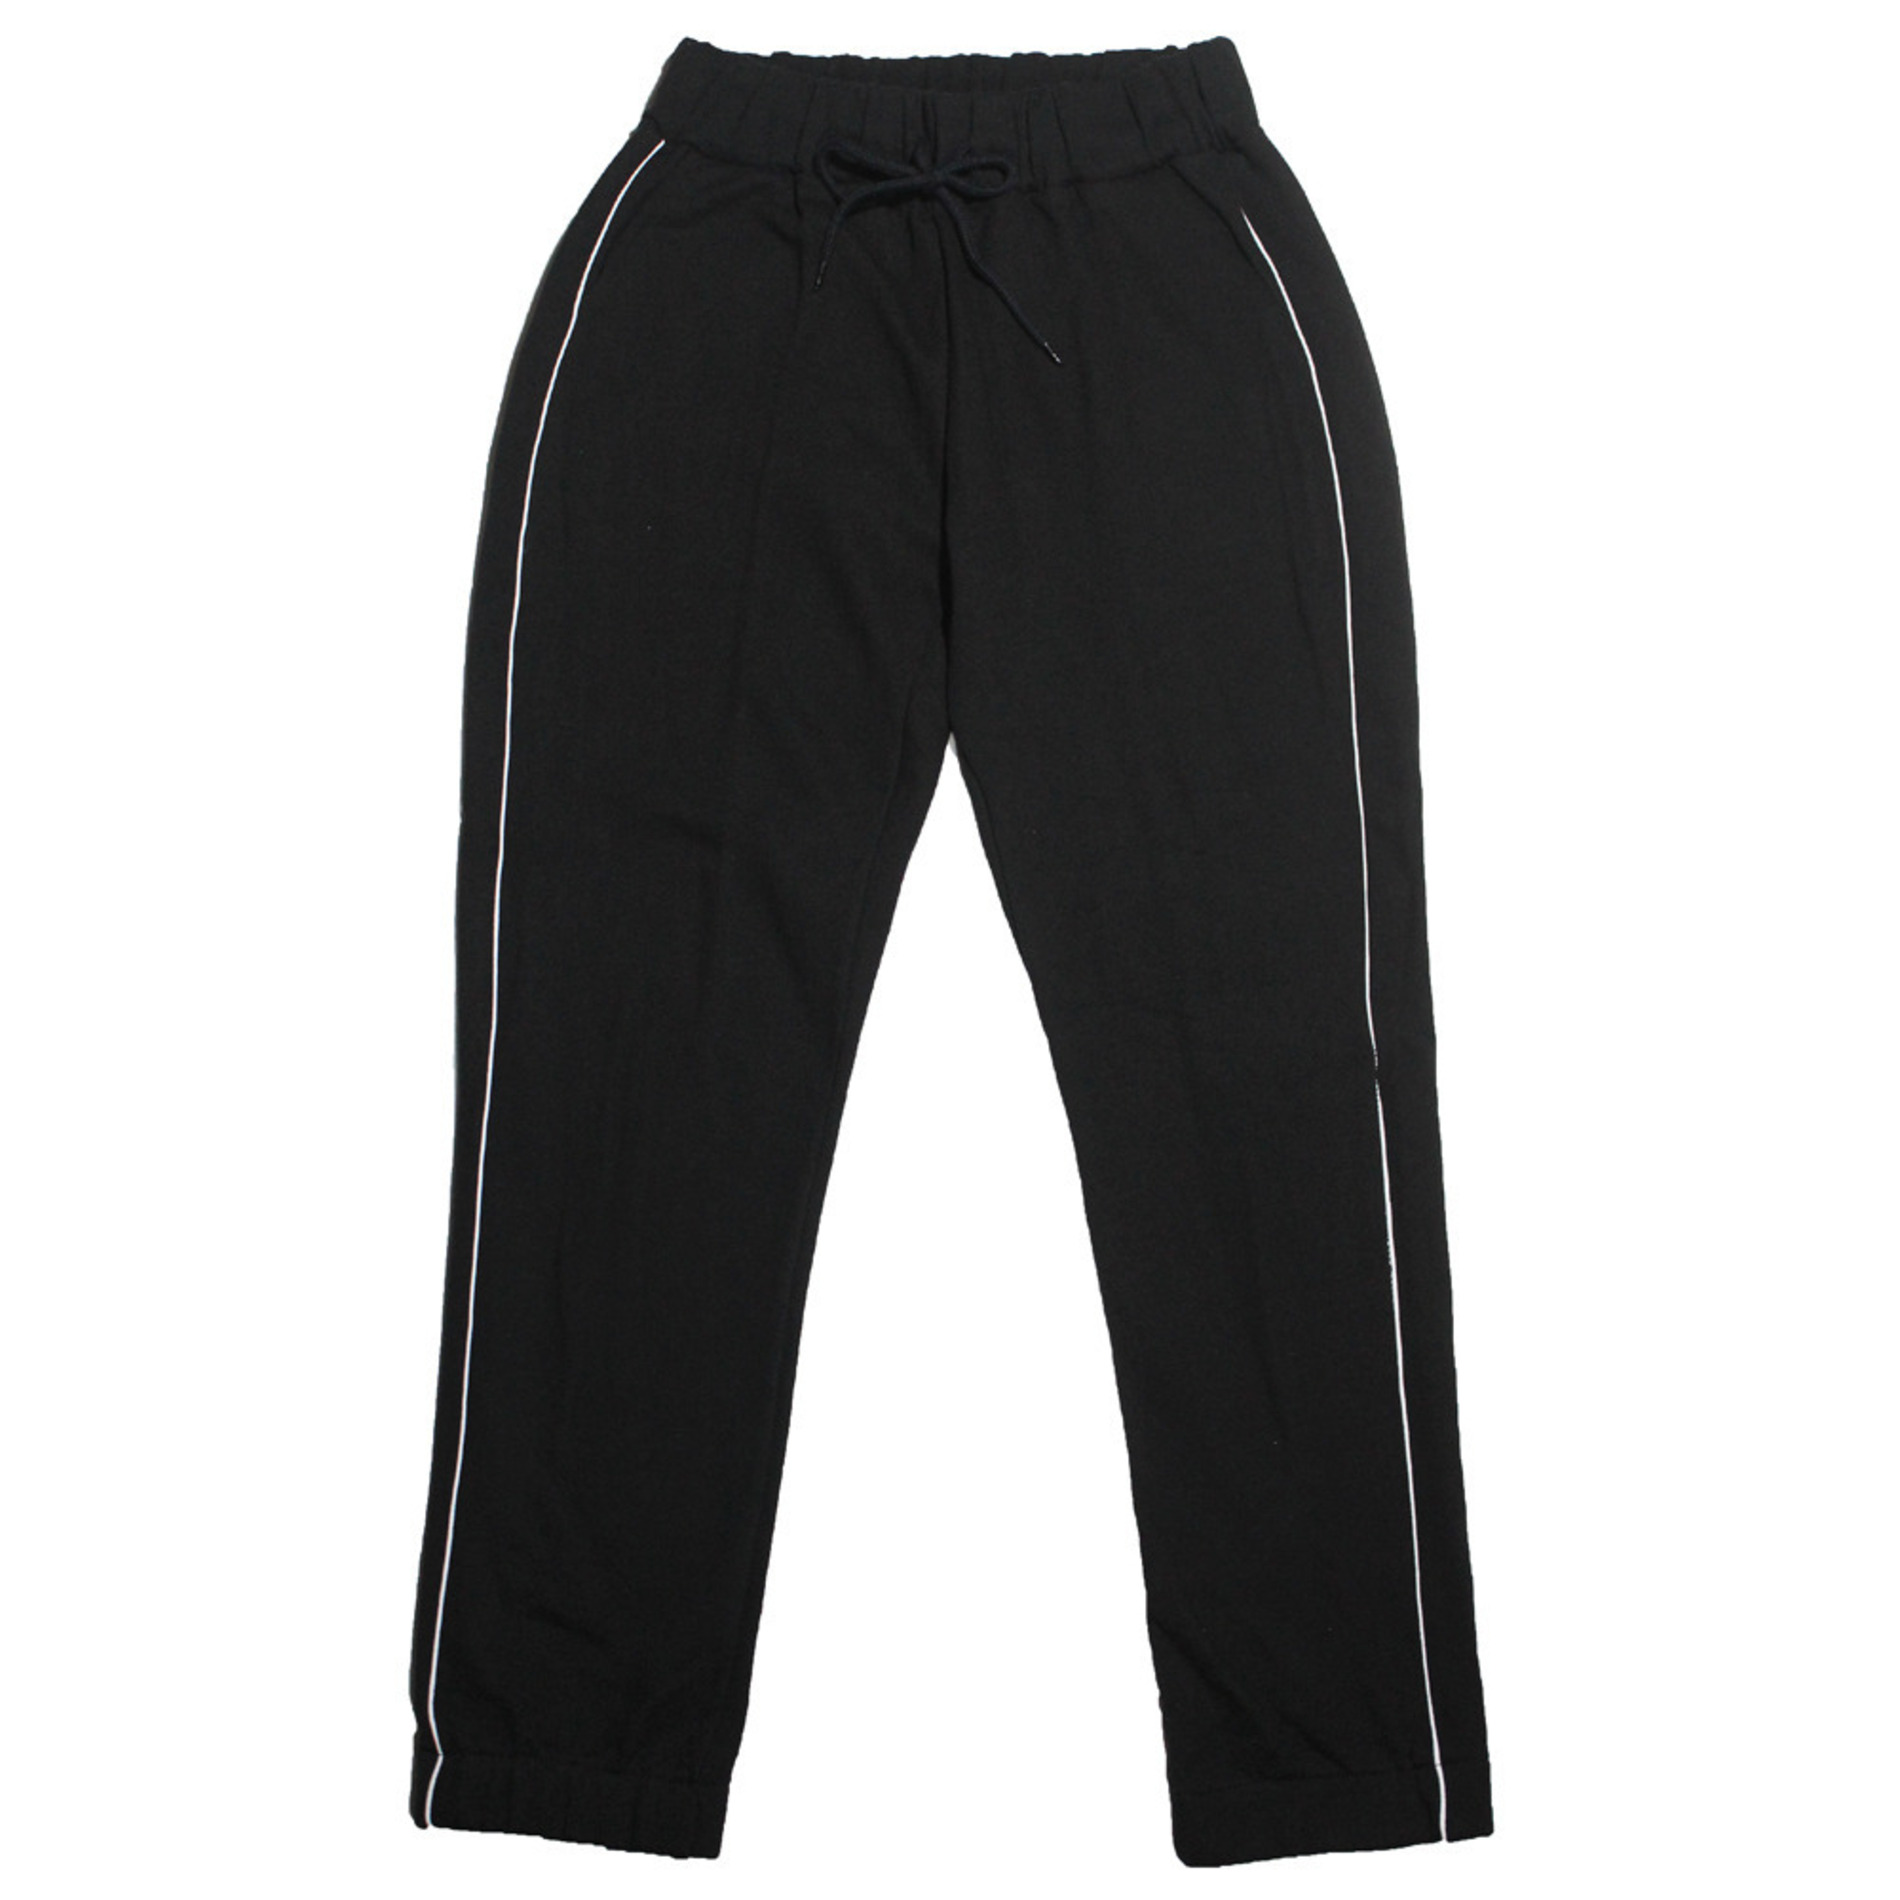 Line training pants (black/white)